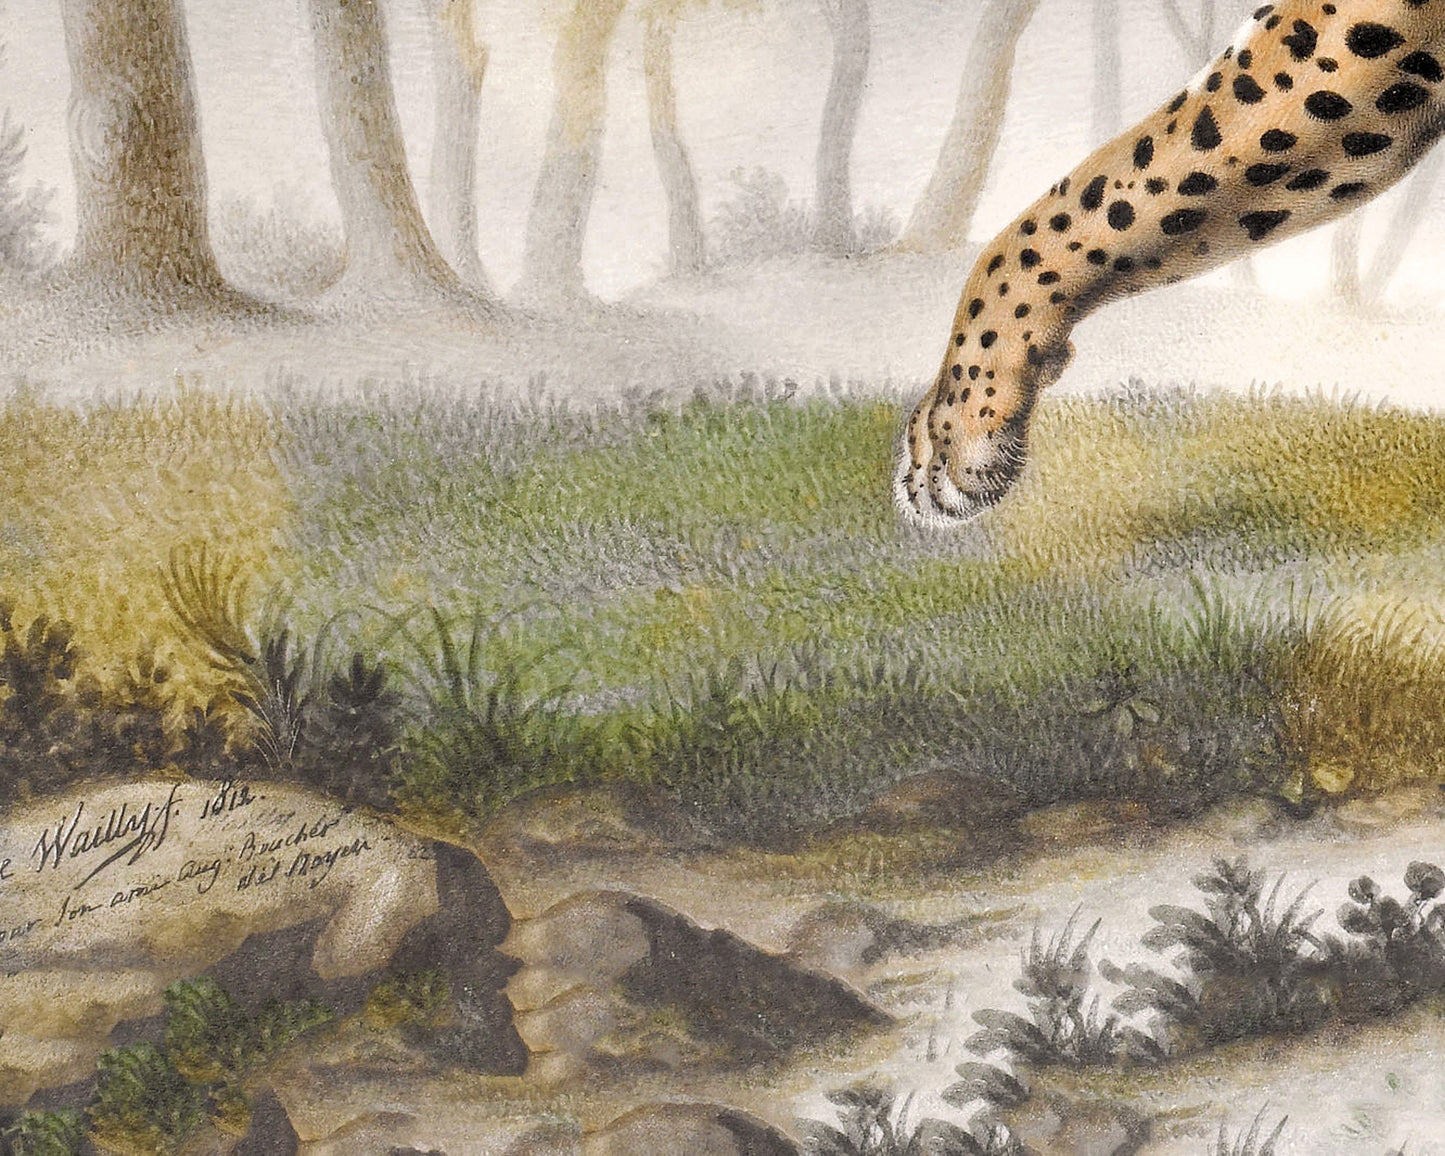 Vintage leopard print | Antique animal art | Jungle cat wall art | Zoology illustration | French artist | Wild animal portrait